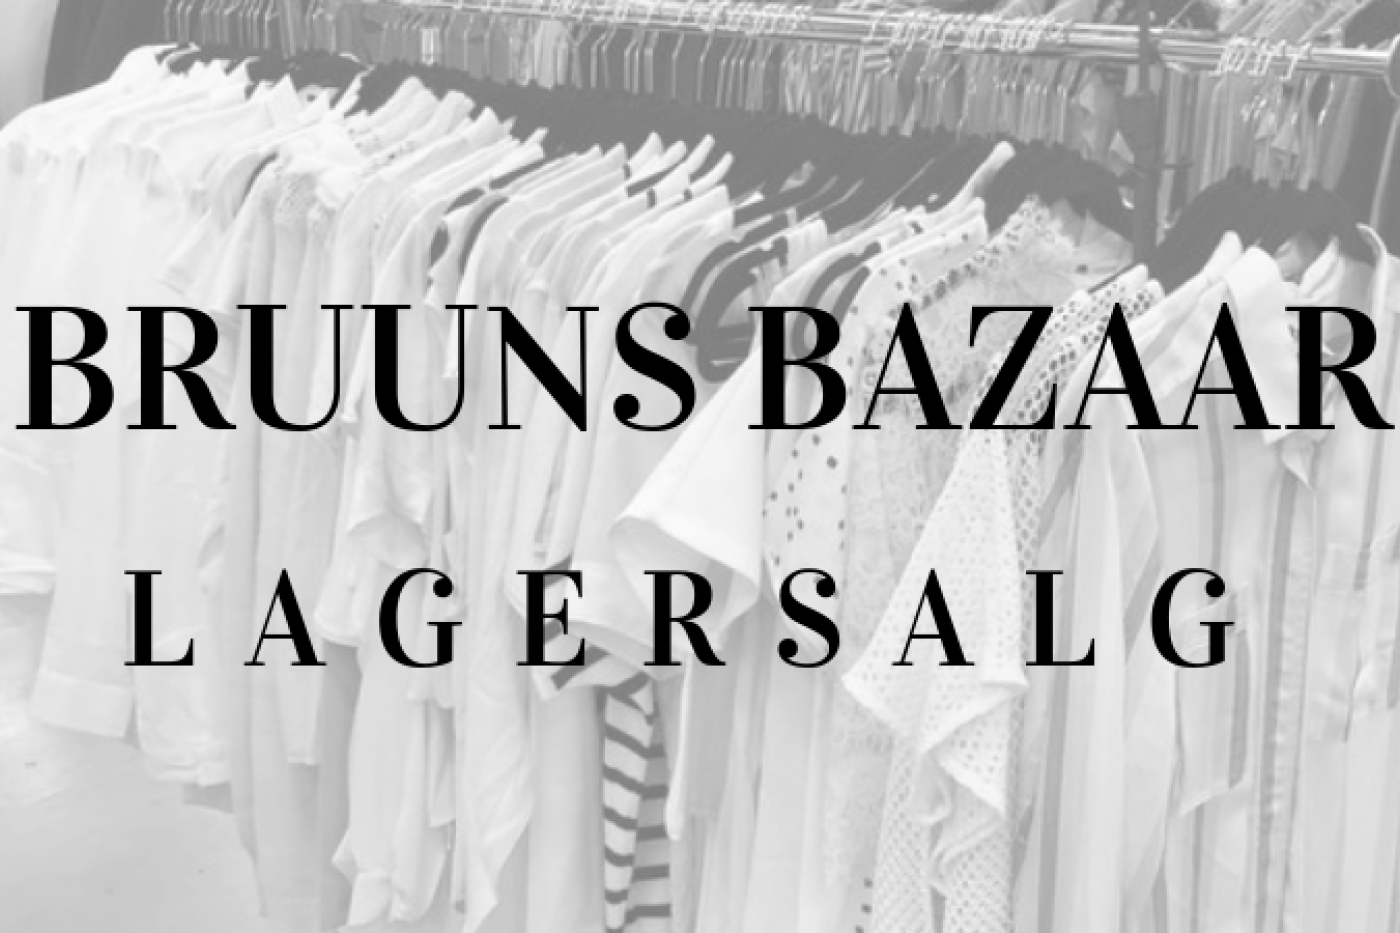 Bruuns Bazaar lagersalg i Valby Hallen